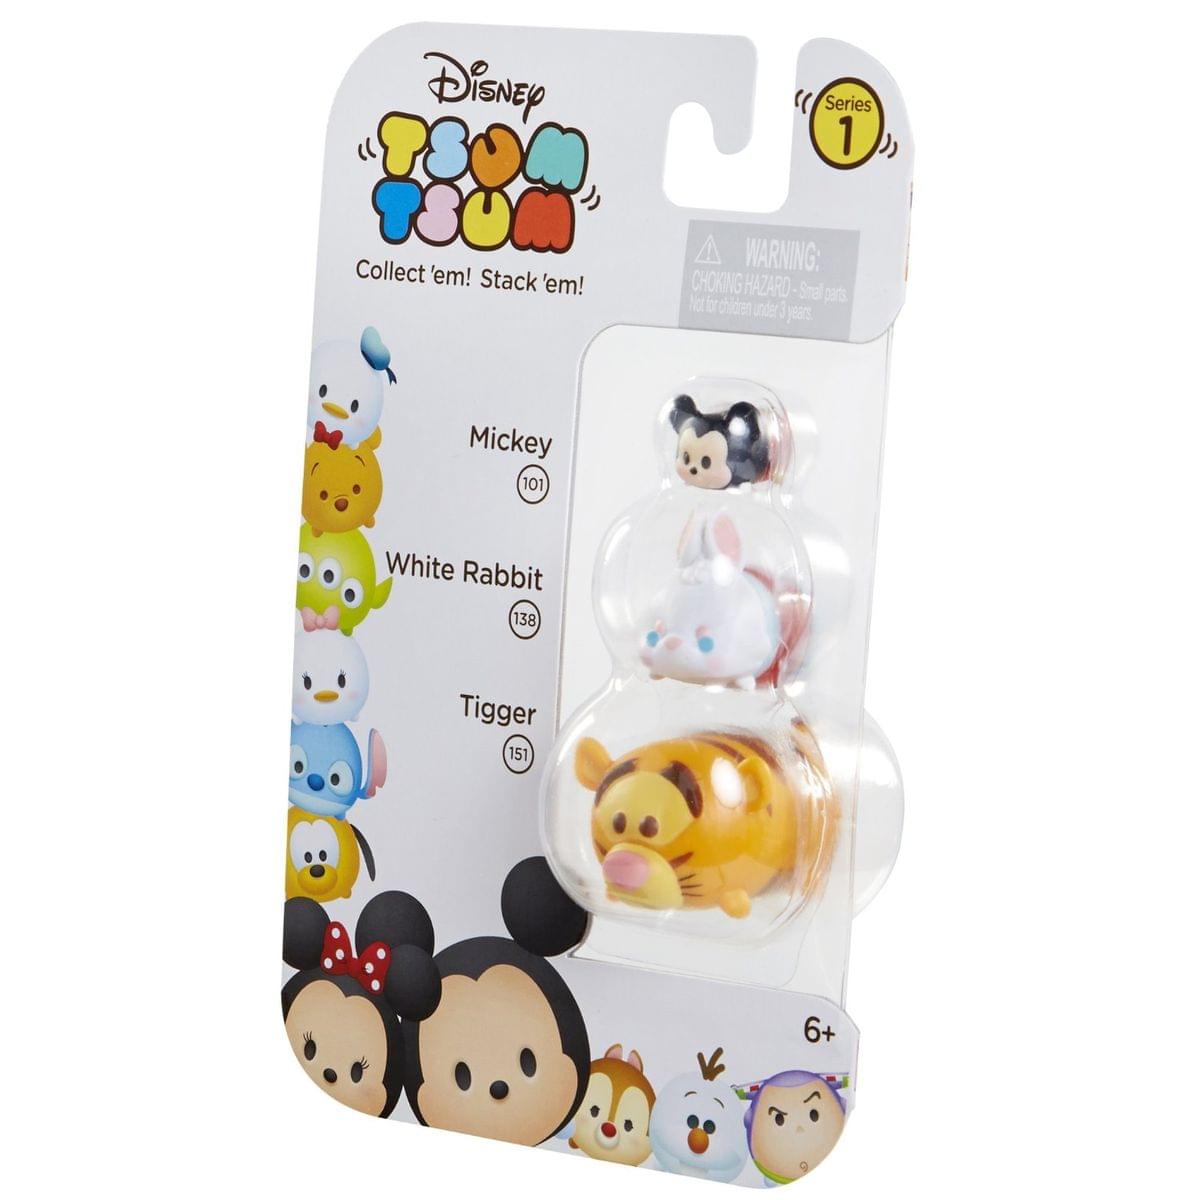 Disney Tsum Tsum 3 Pack: Mickey, White Rabbit, Tigger